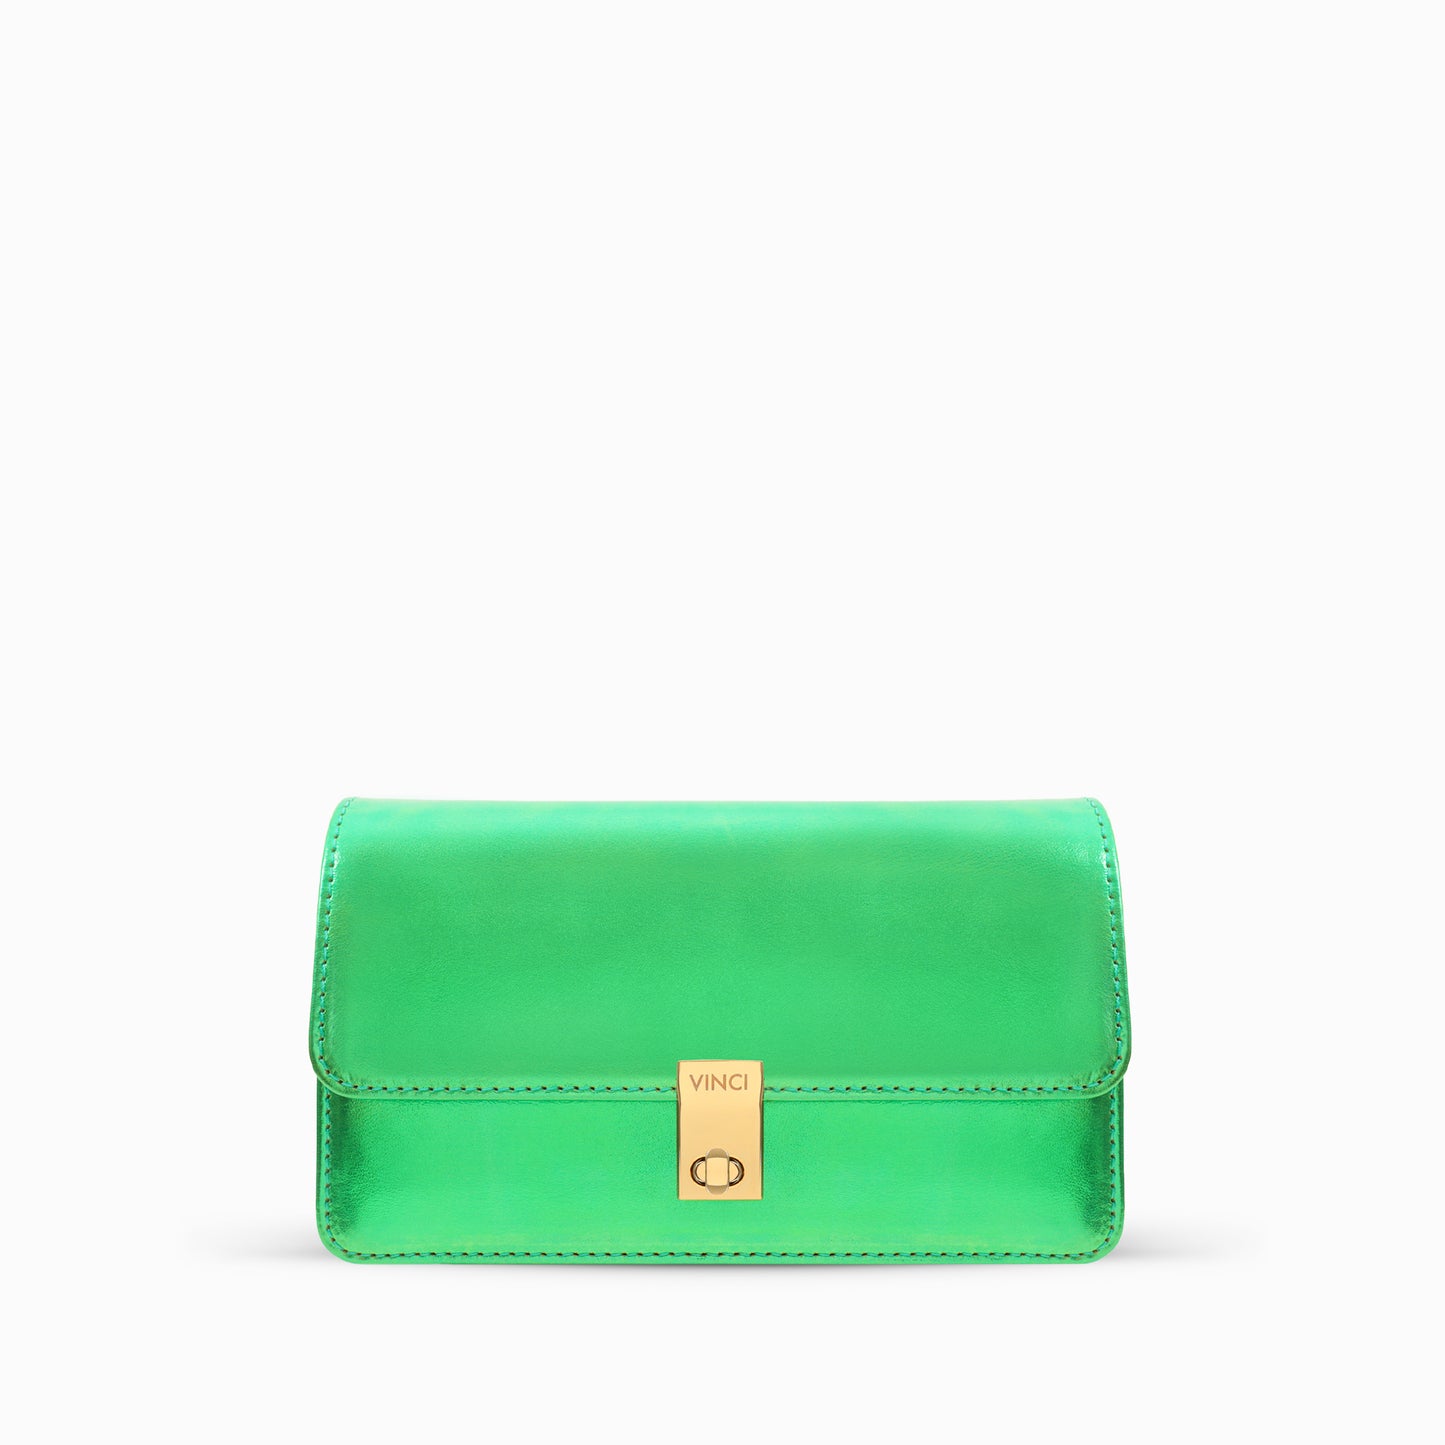 The Torola Green Handbag